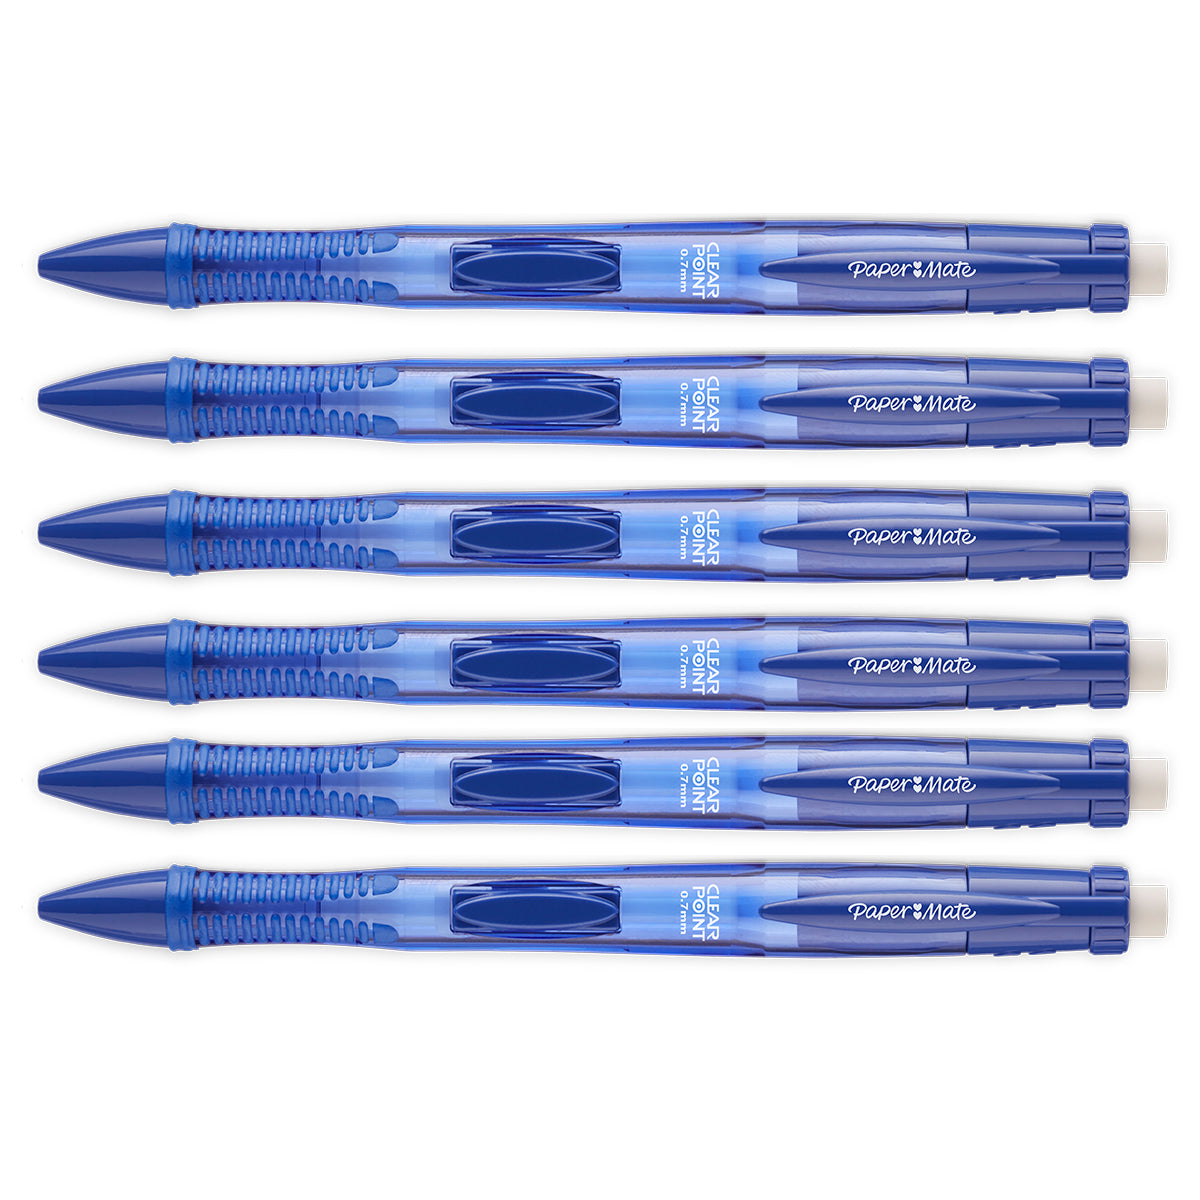  Mr Pen- Clear Pencil Pouch, 3 Pack, Clear Pencil